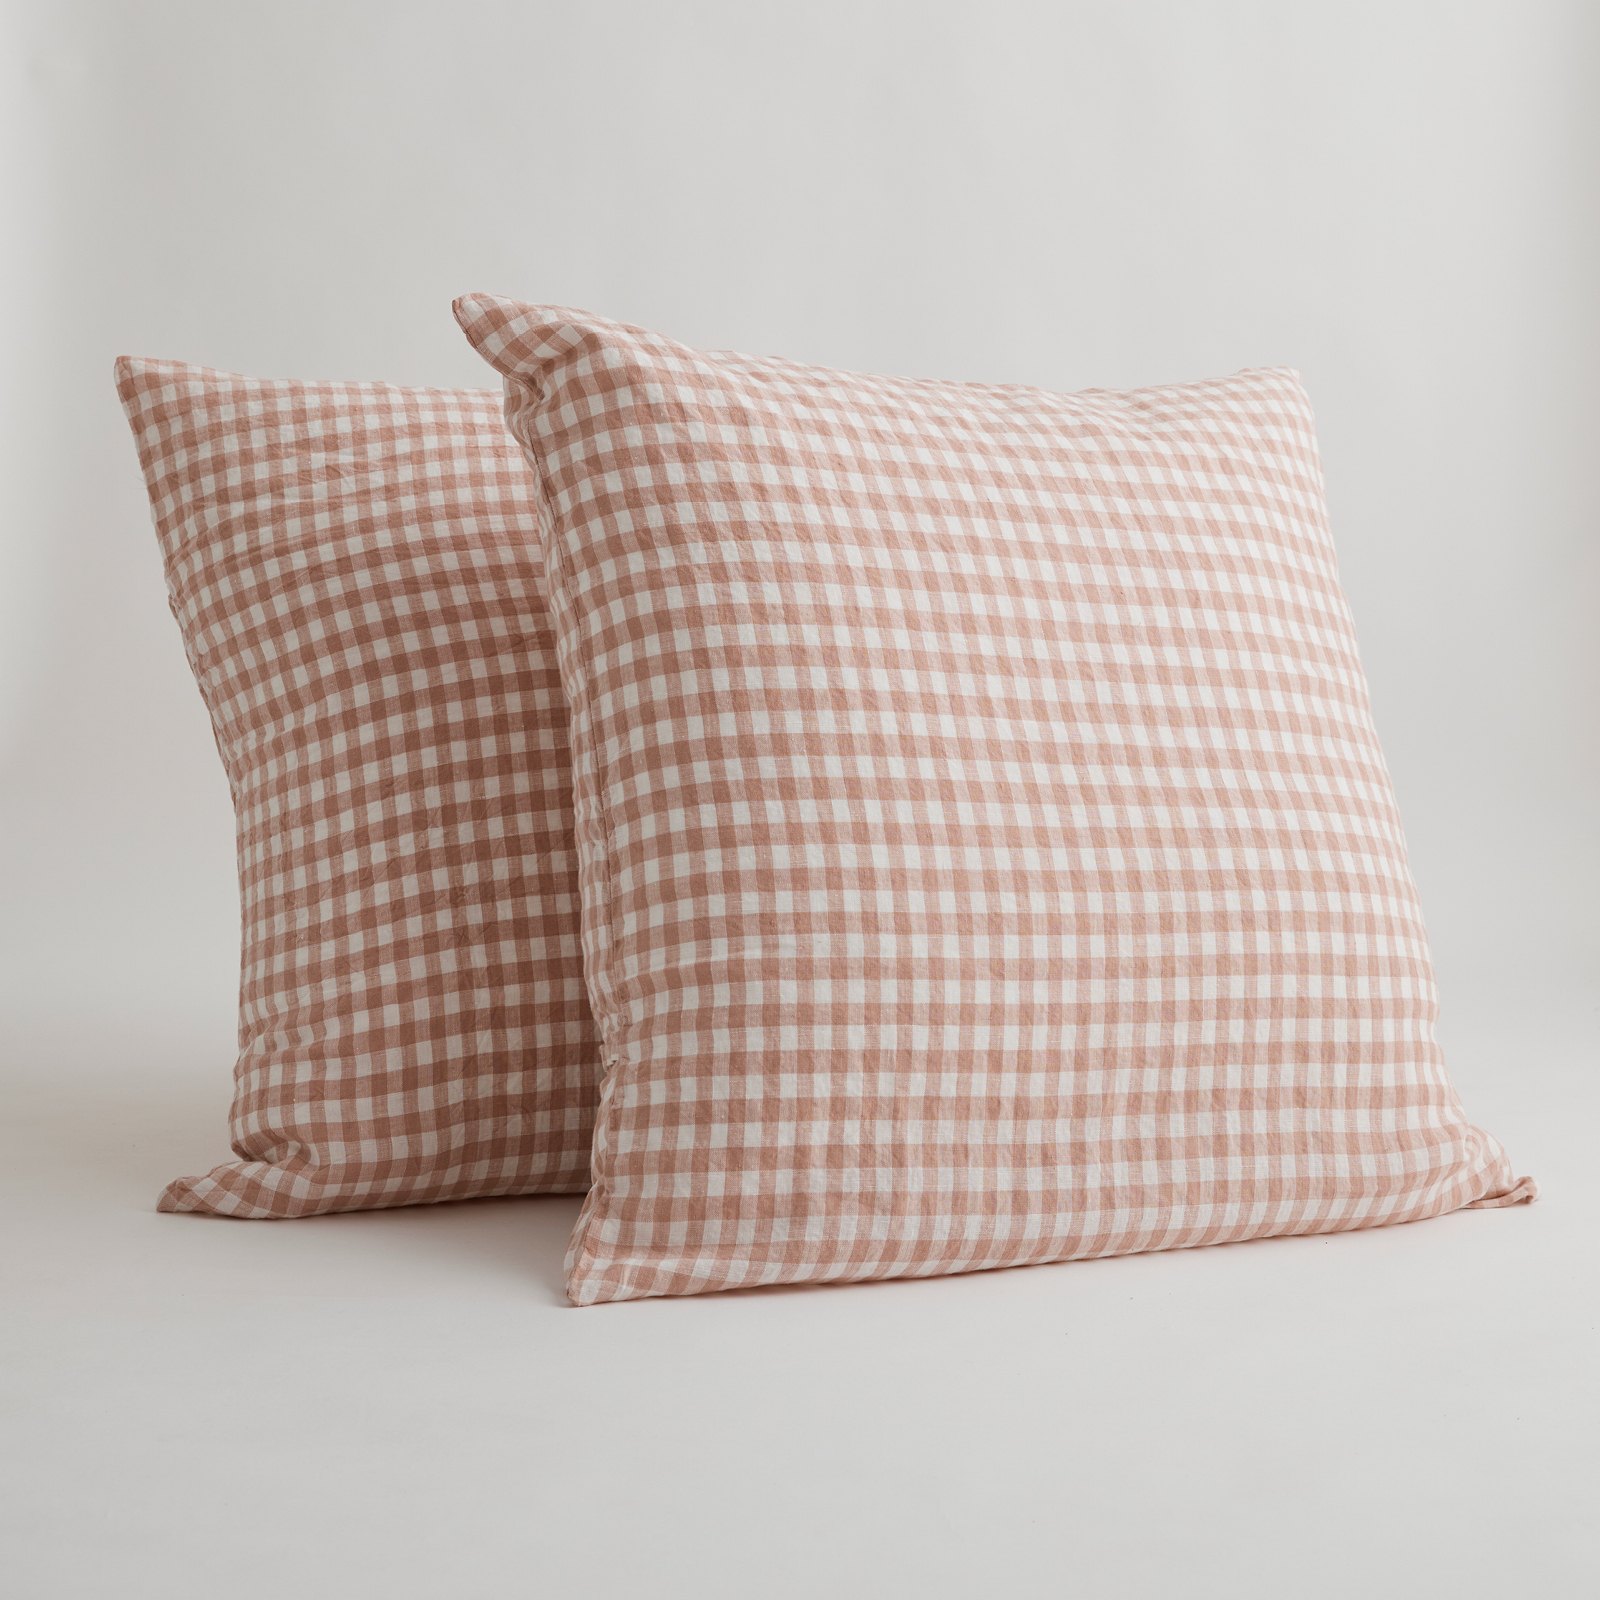 100% Pure Linen European Pillowcase Set in Clay Gingham (2)